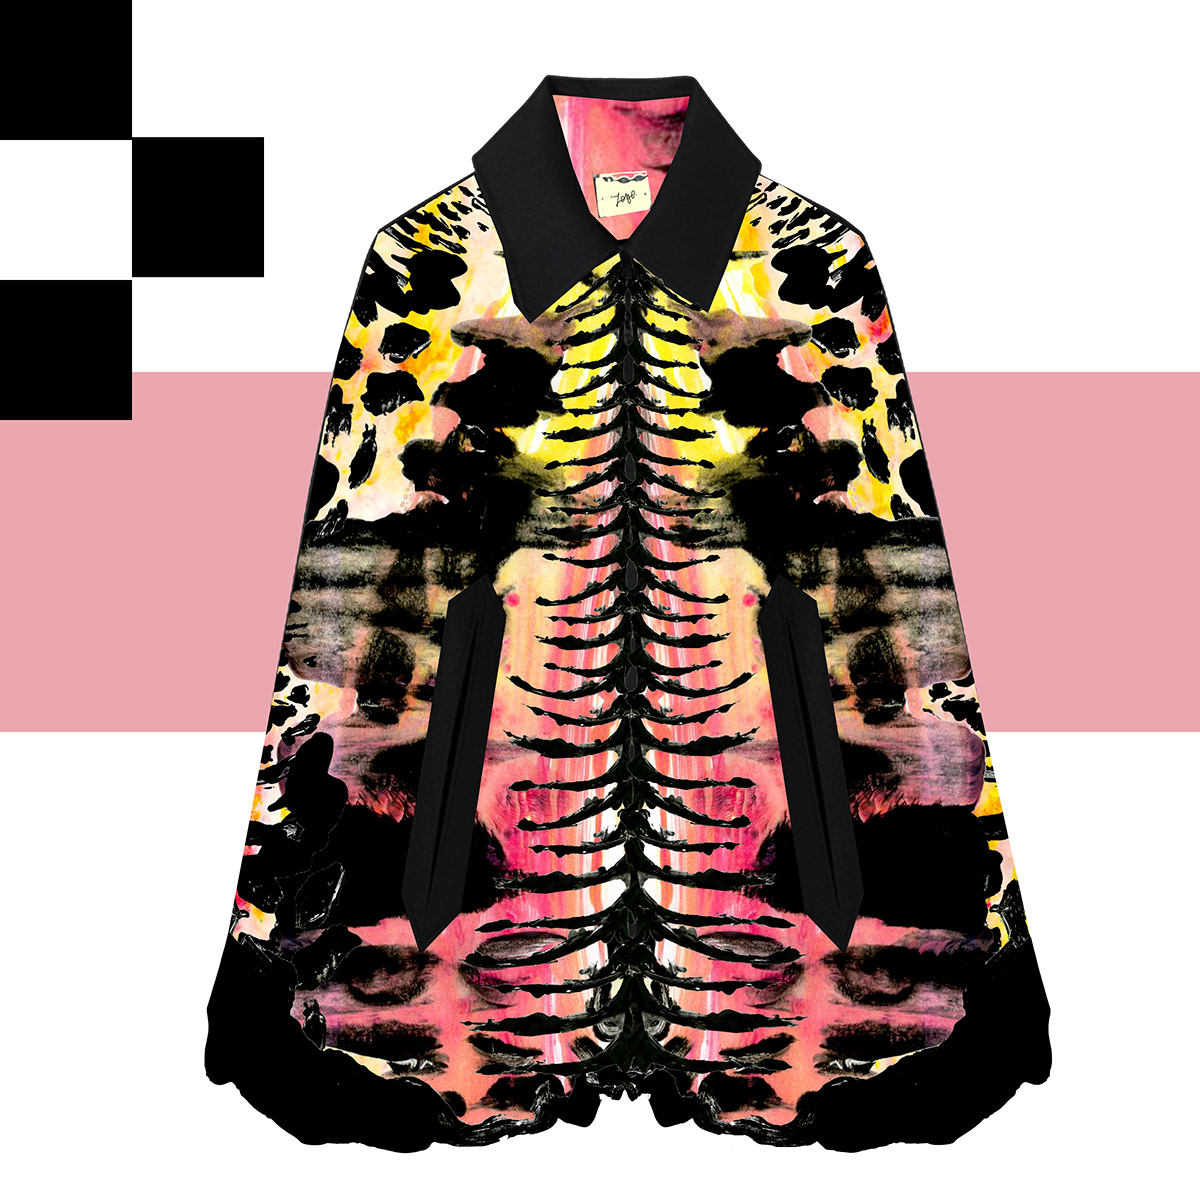 Grasshopper design Textiles clothes